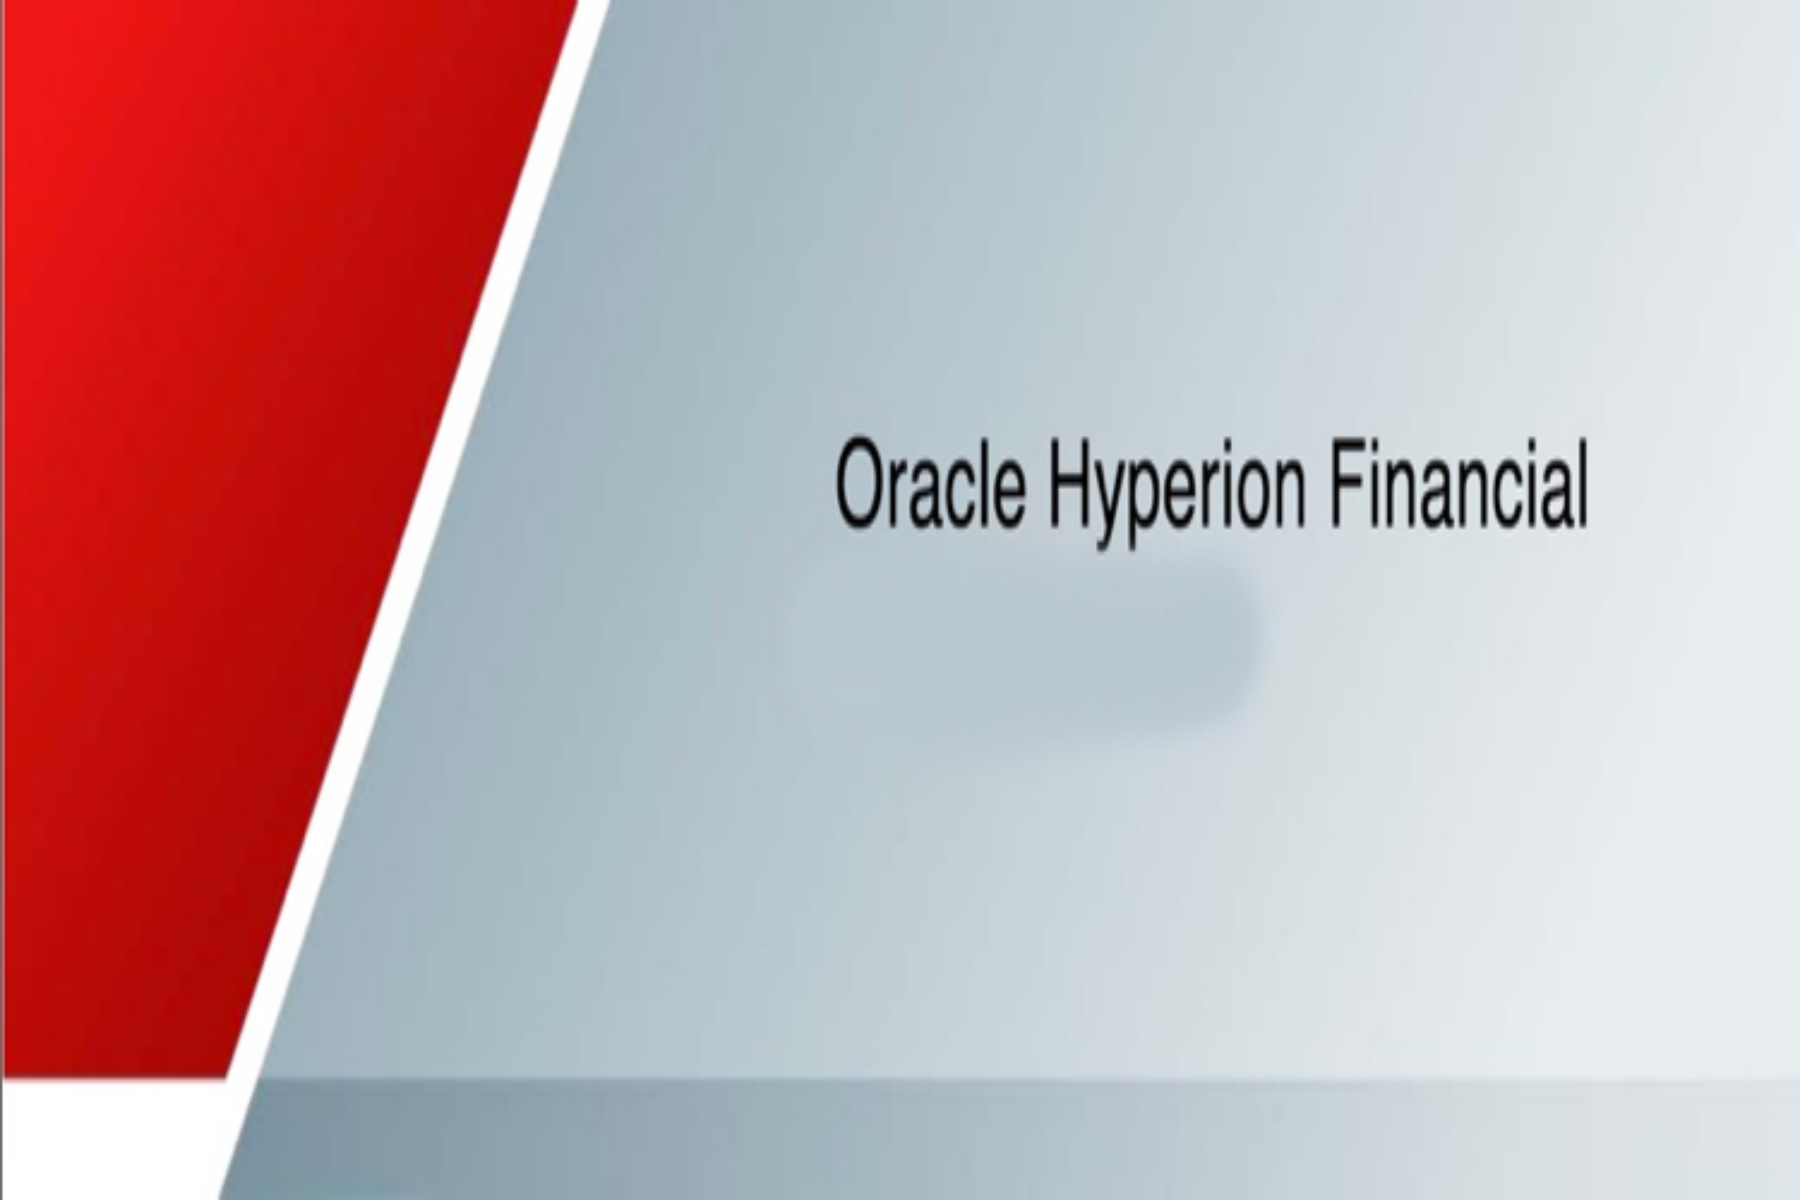 Hyperion Financial Training in Chennai